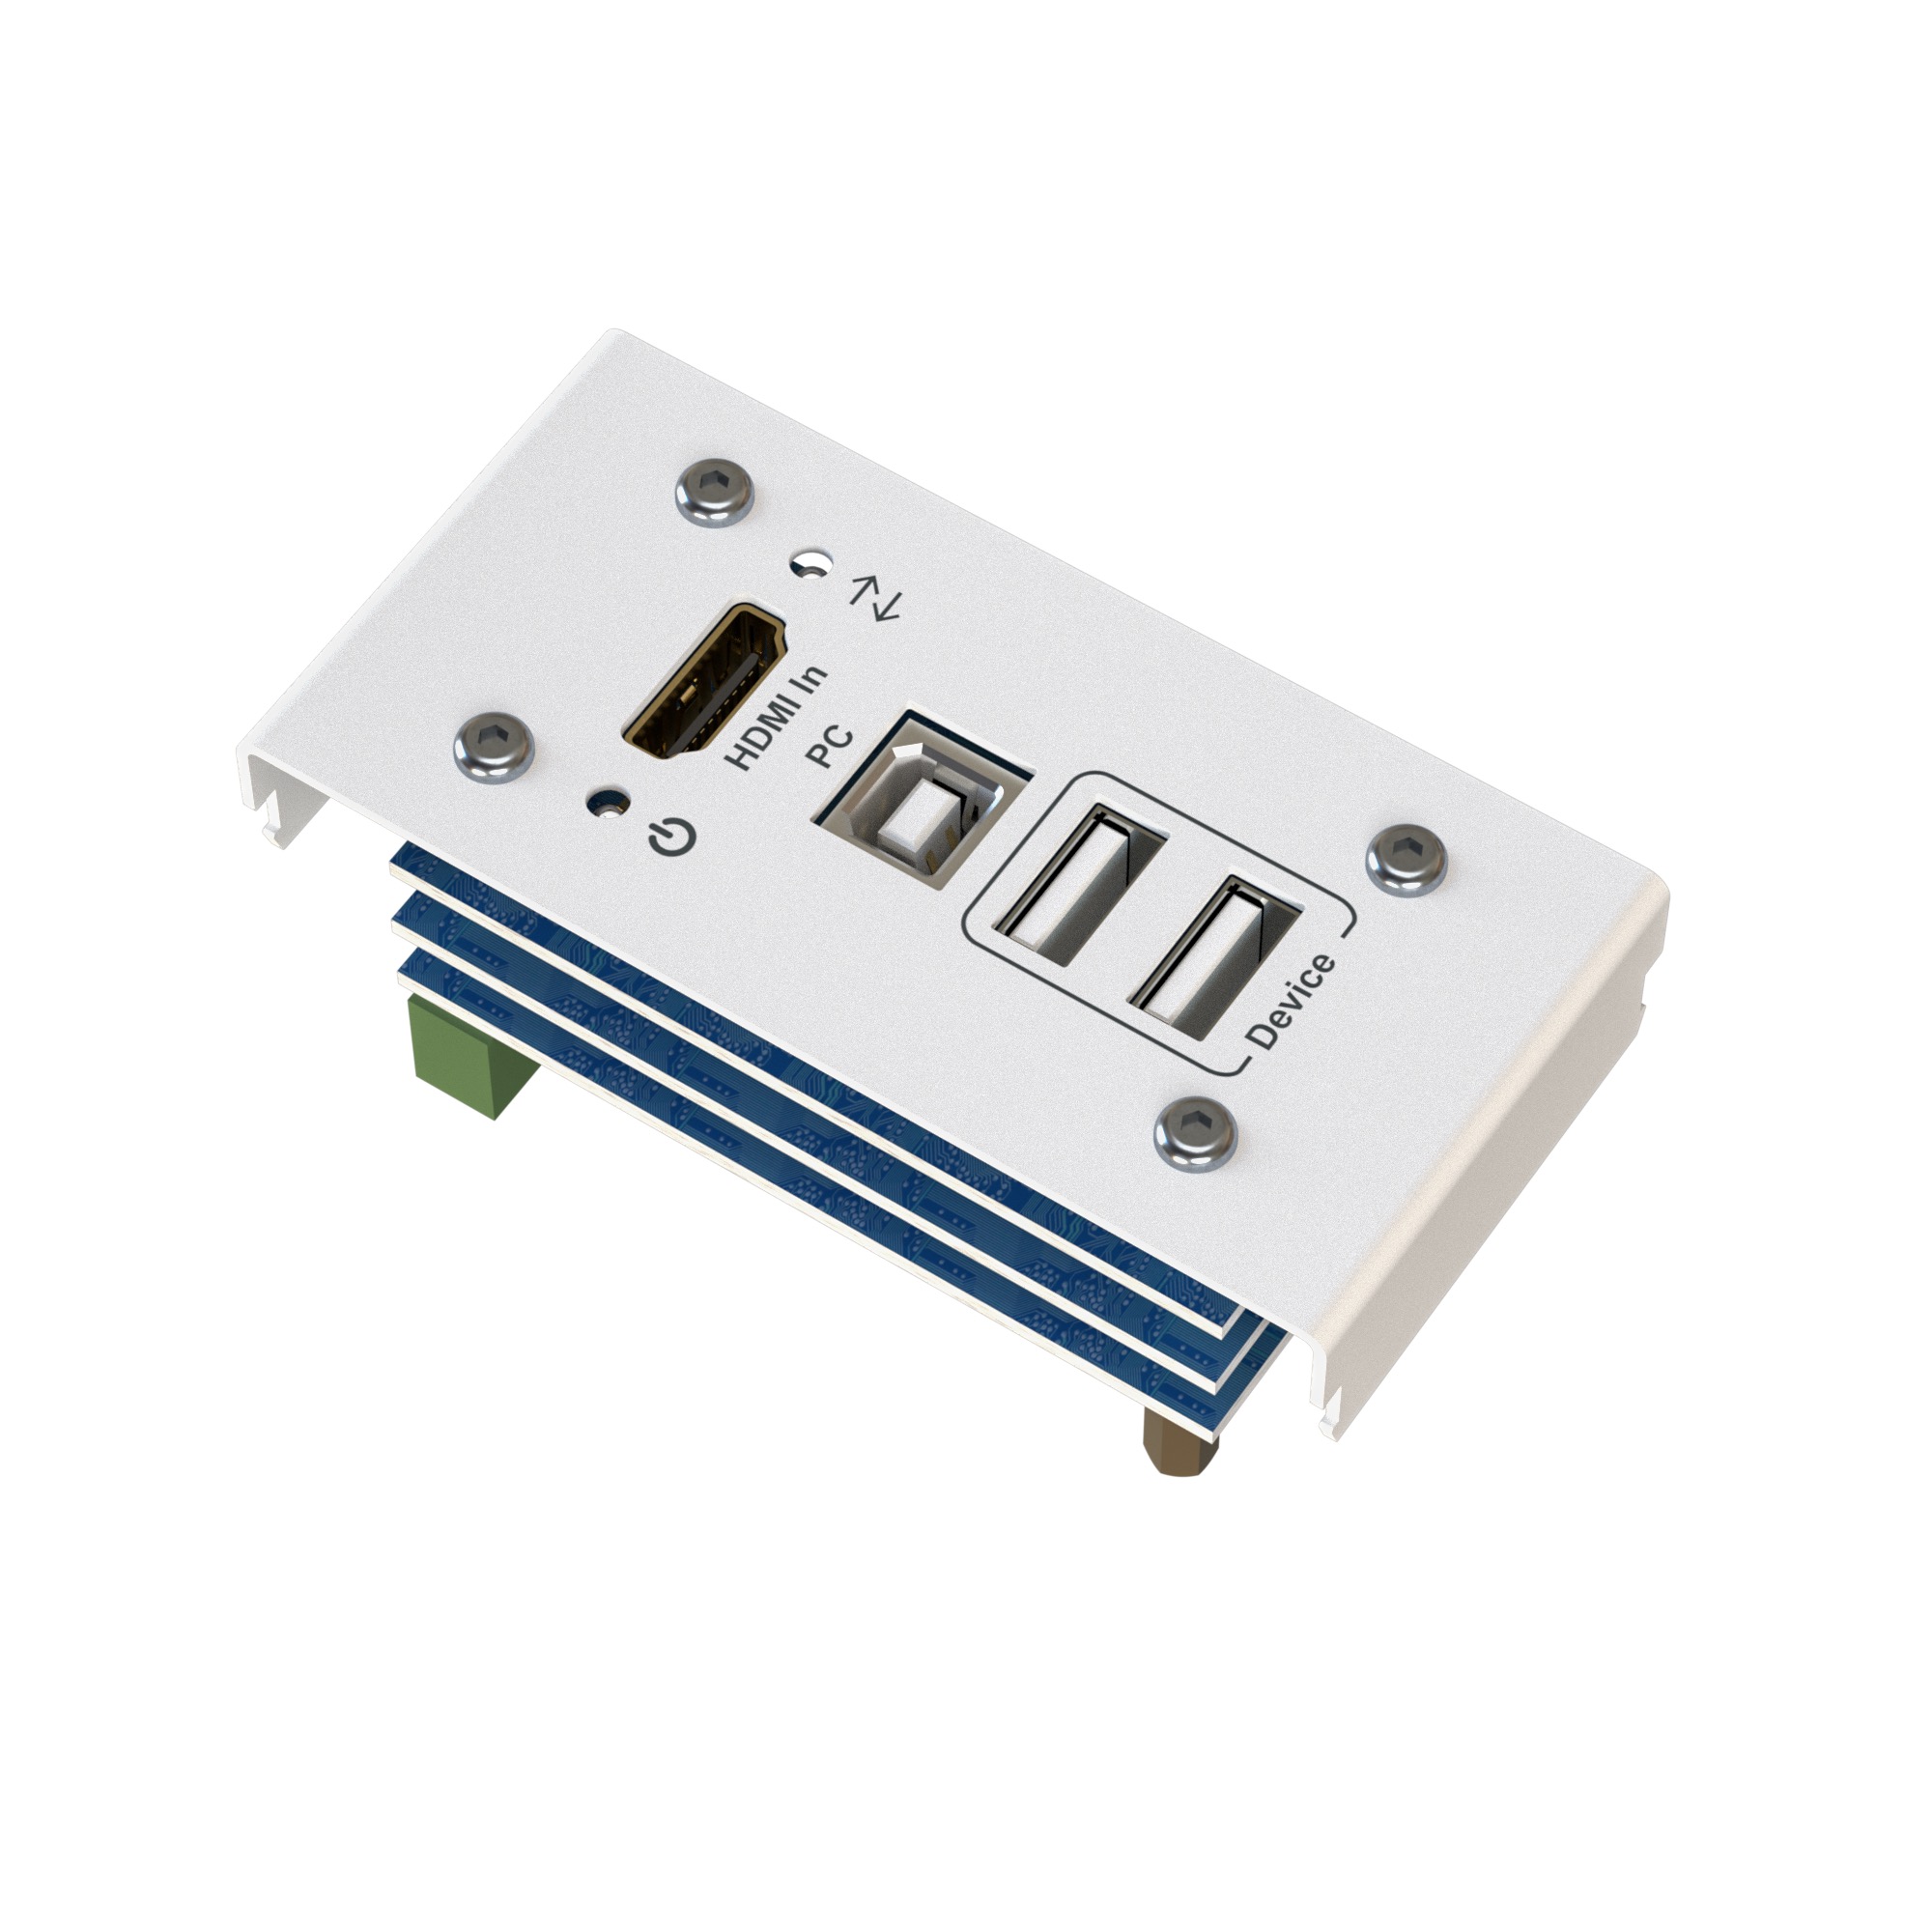 Konnect flex 45 - HDMI USB Transmitter